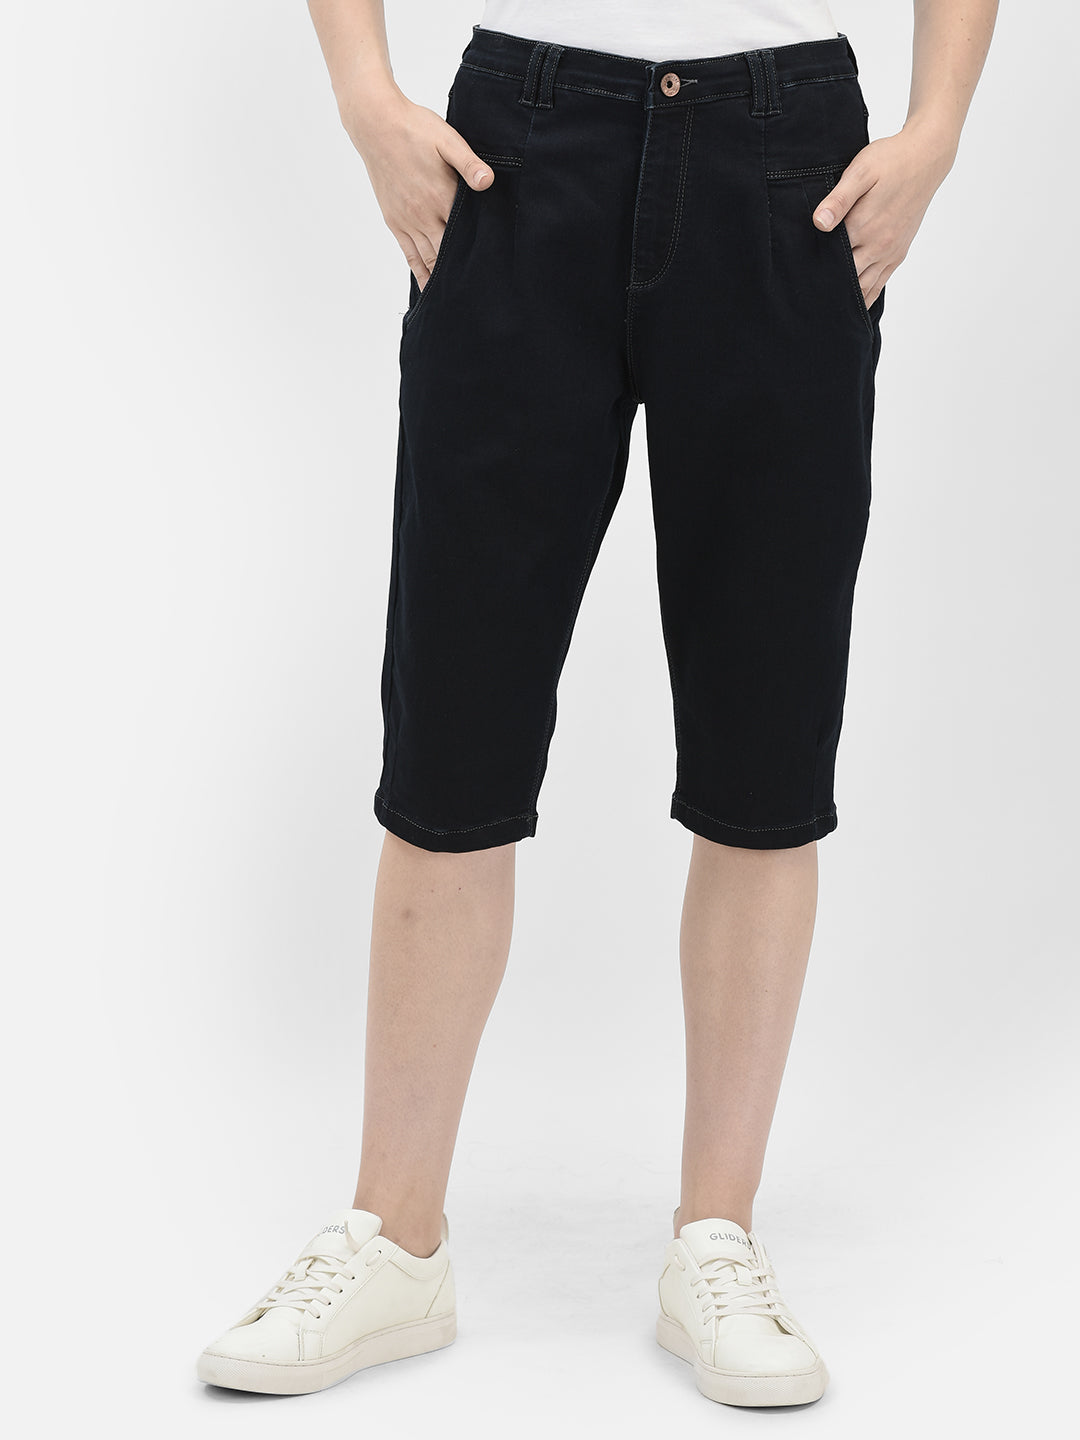 Black Stretchable Denim Shorts-Women Shorts-Crimsoune Club